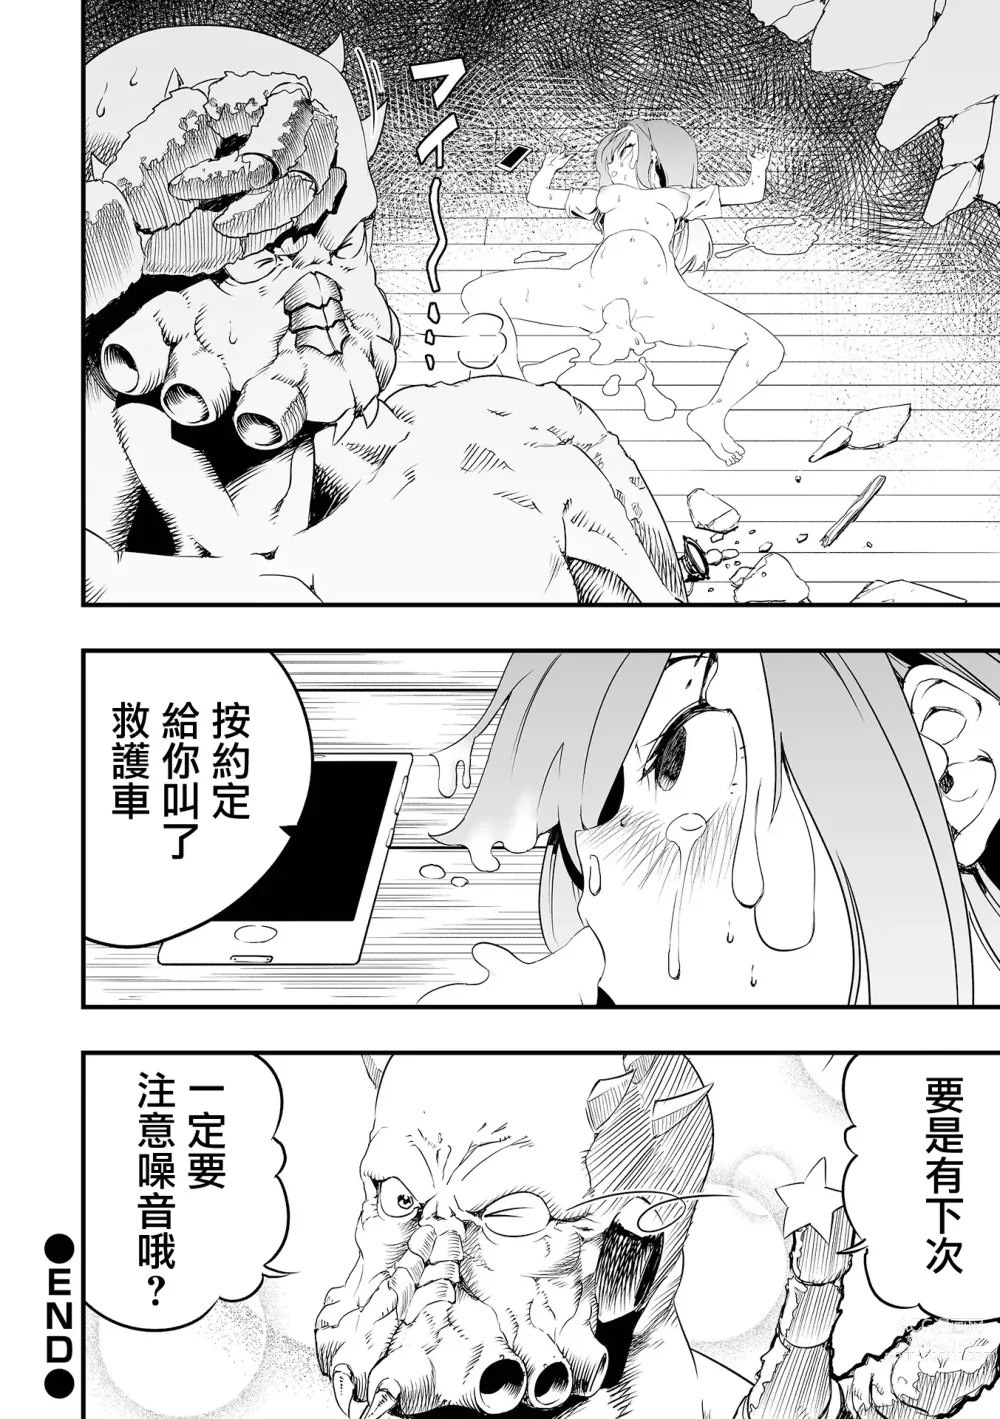 Page 23 of manga 鄰居的壁咚X